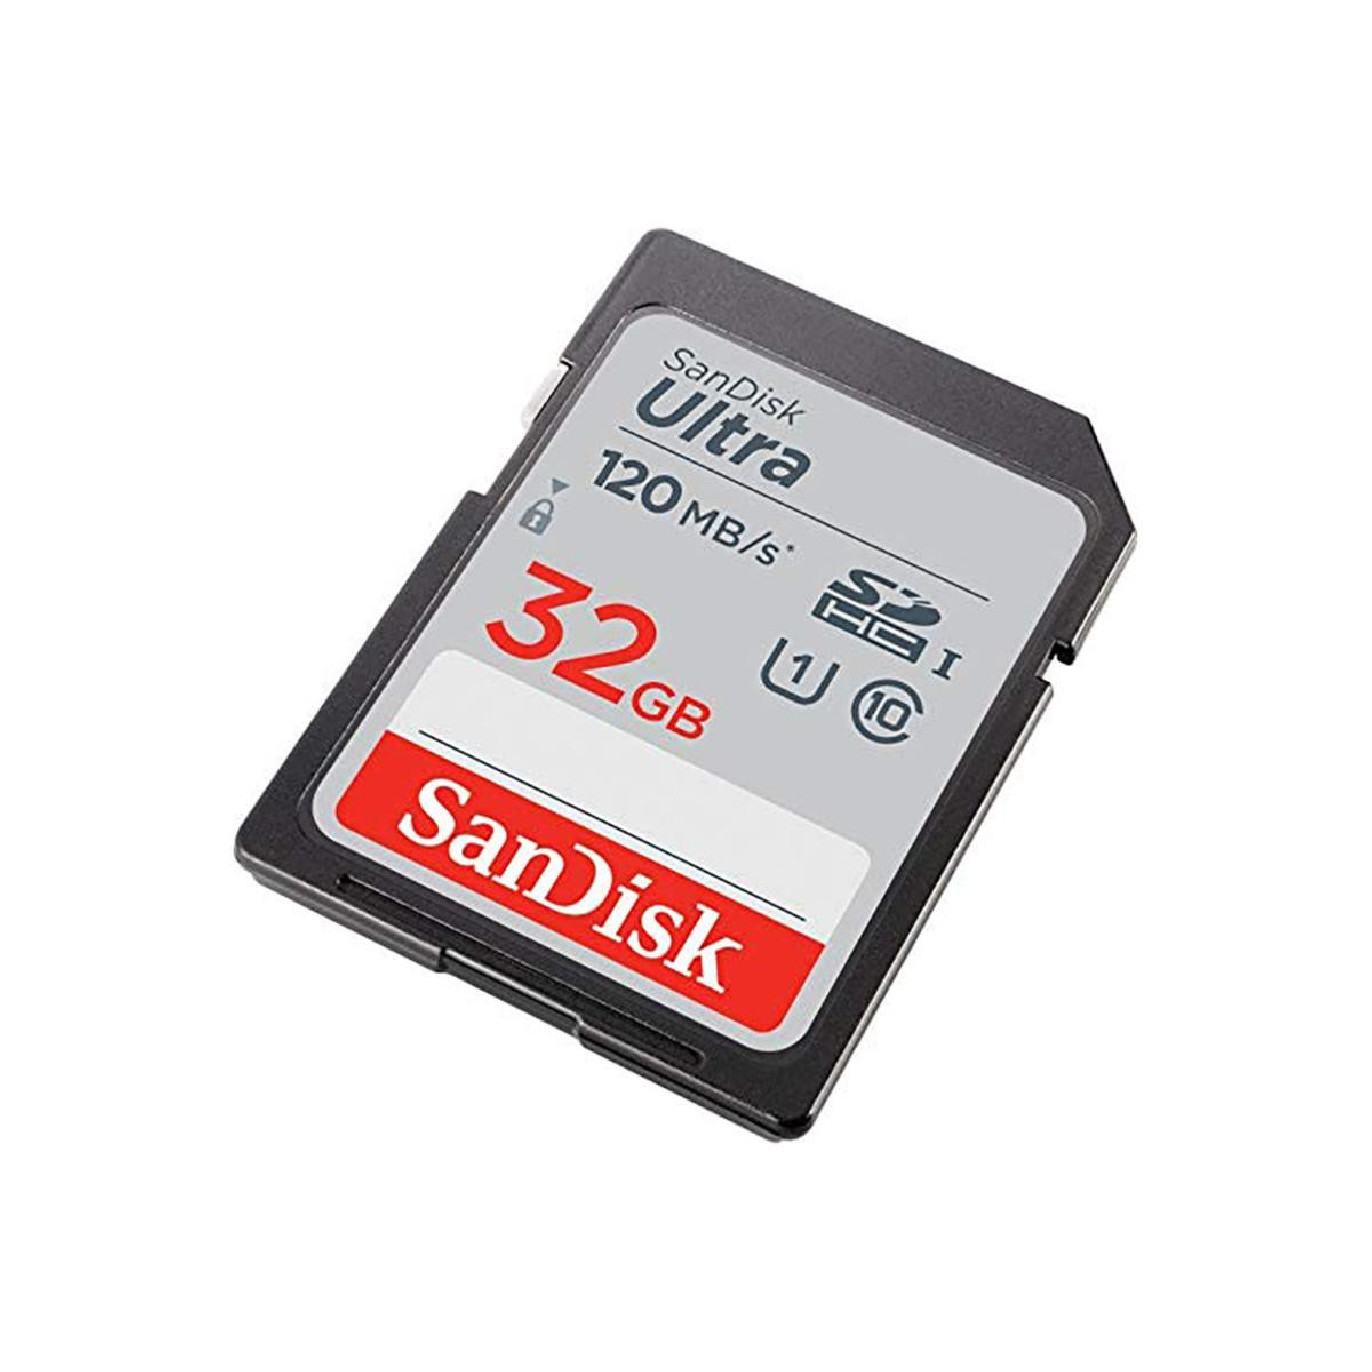 Choisir sa CARTE SD : Sandisk EXTREME PRO VS Sandisk ULTRA 